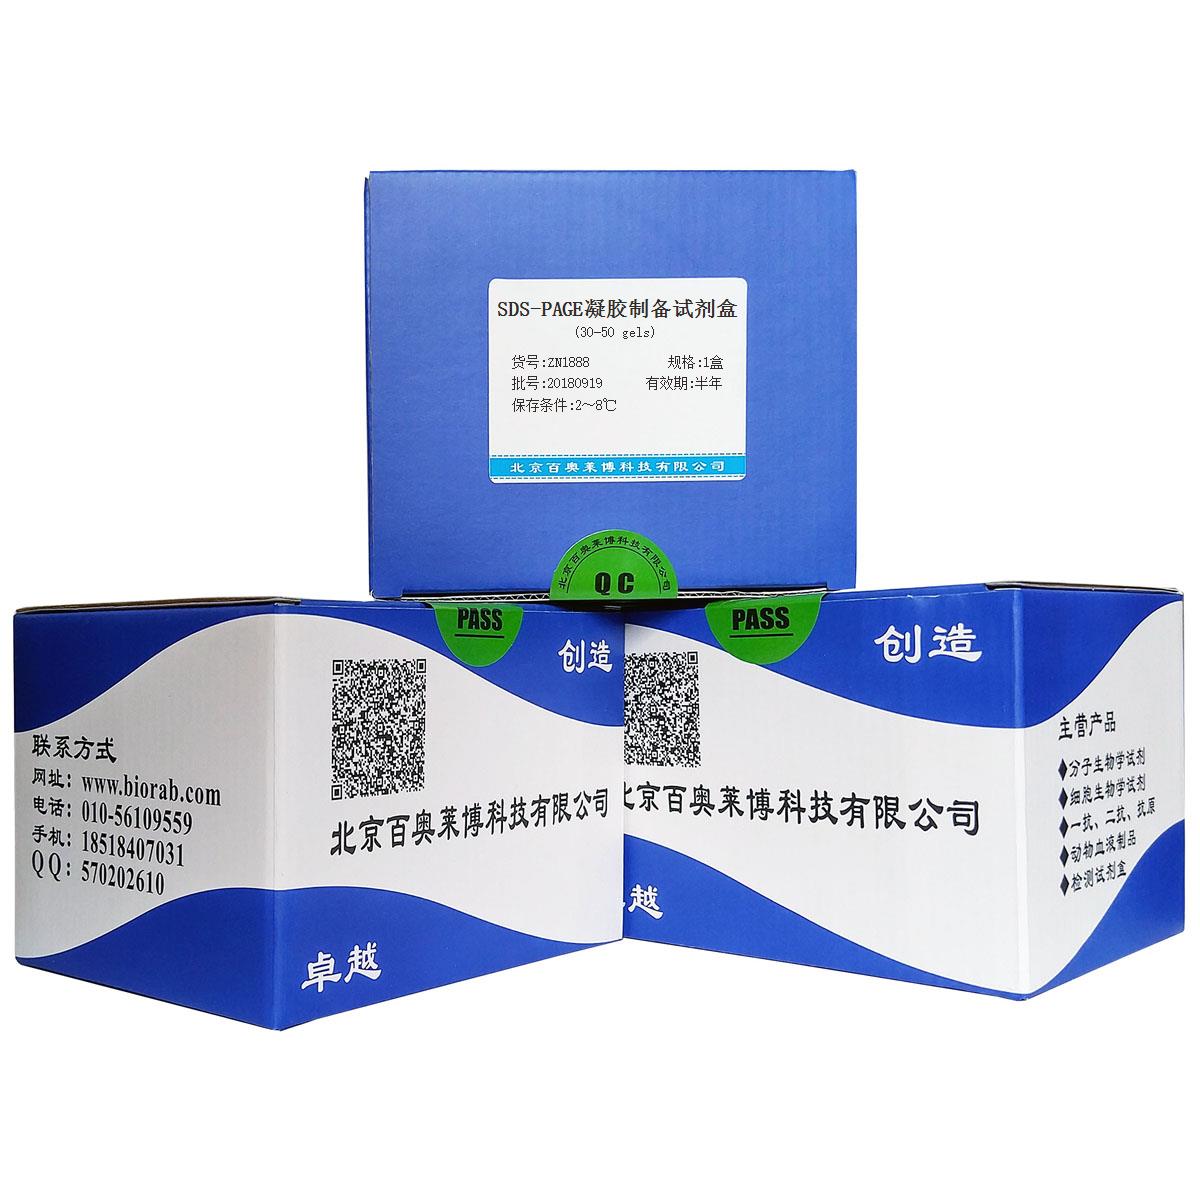 SDS-PAGE凝胶制备试剂盒(30-50 gels)